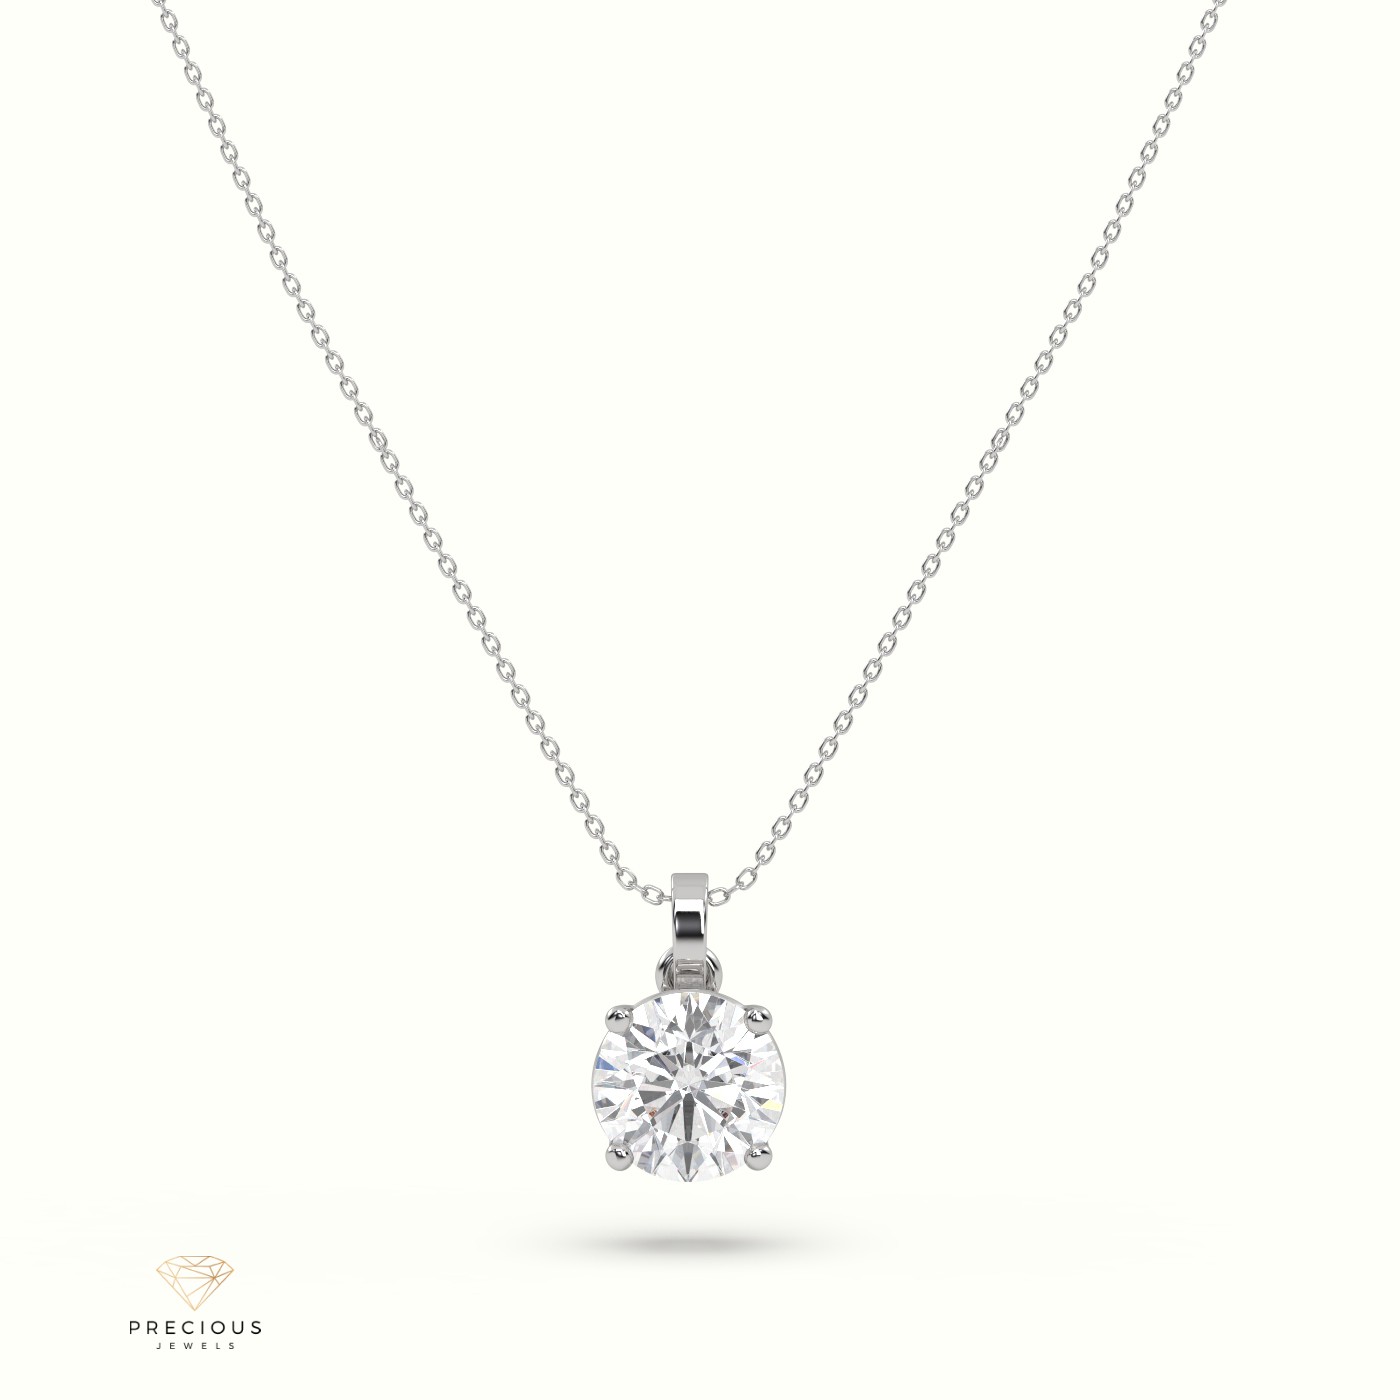 18k white gold diamond solitair pendant 0.80 carat 4 round shaped prongs